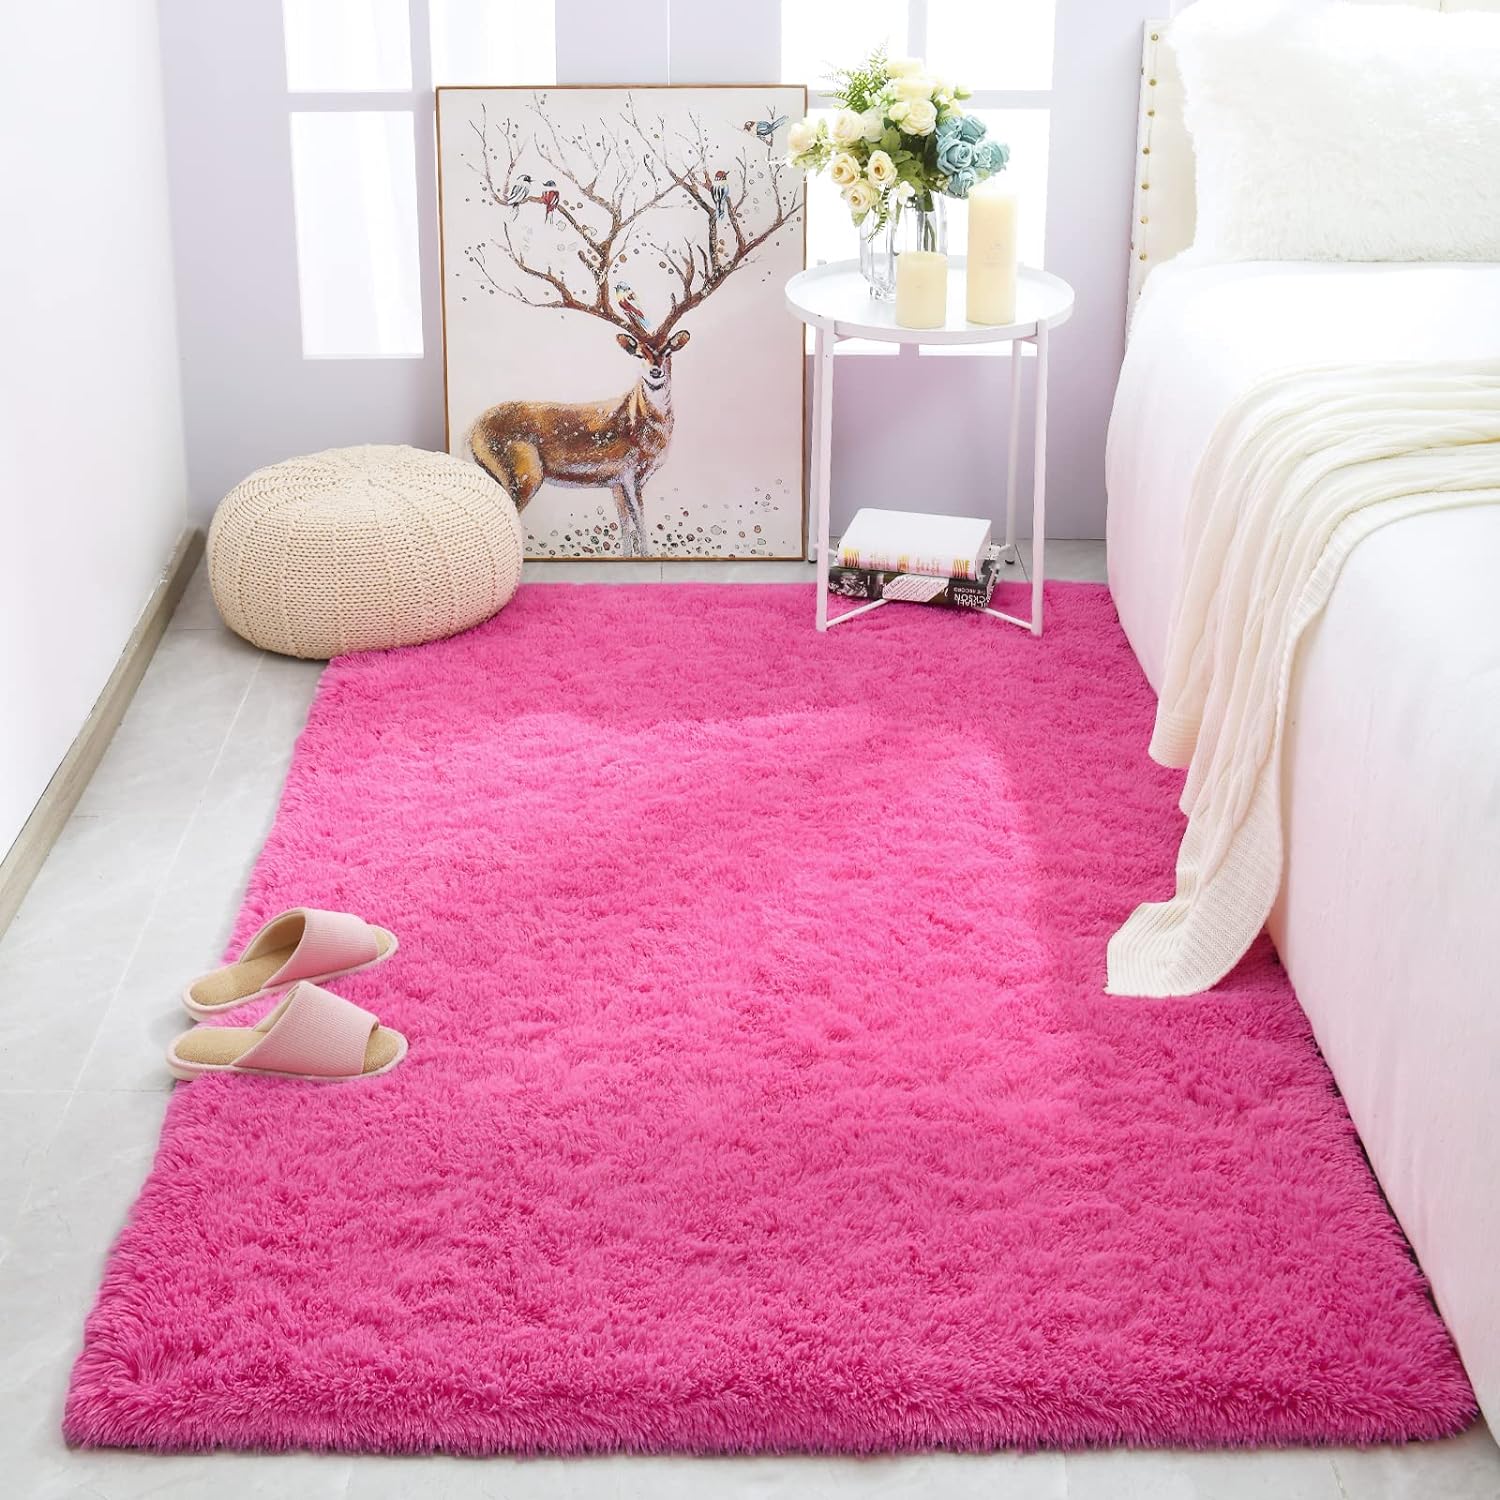 Merelax Soft Modern Indoor Shaggy Rug for Bedroom Livingroom Dorm Kids Room Home Decorative, Non-Slip Plush Fluffy Furry Fur Area Rugs Comfy Nursery Accent Floor Carpet 3x5 Feet, Hot Pink